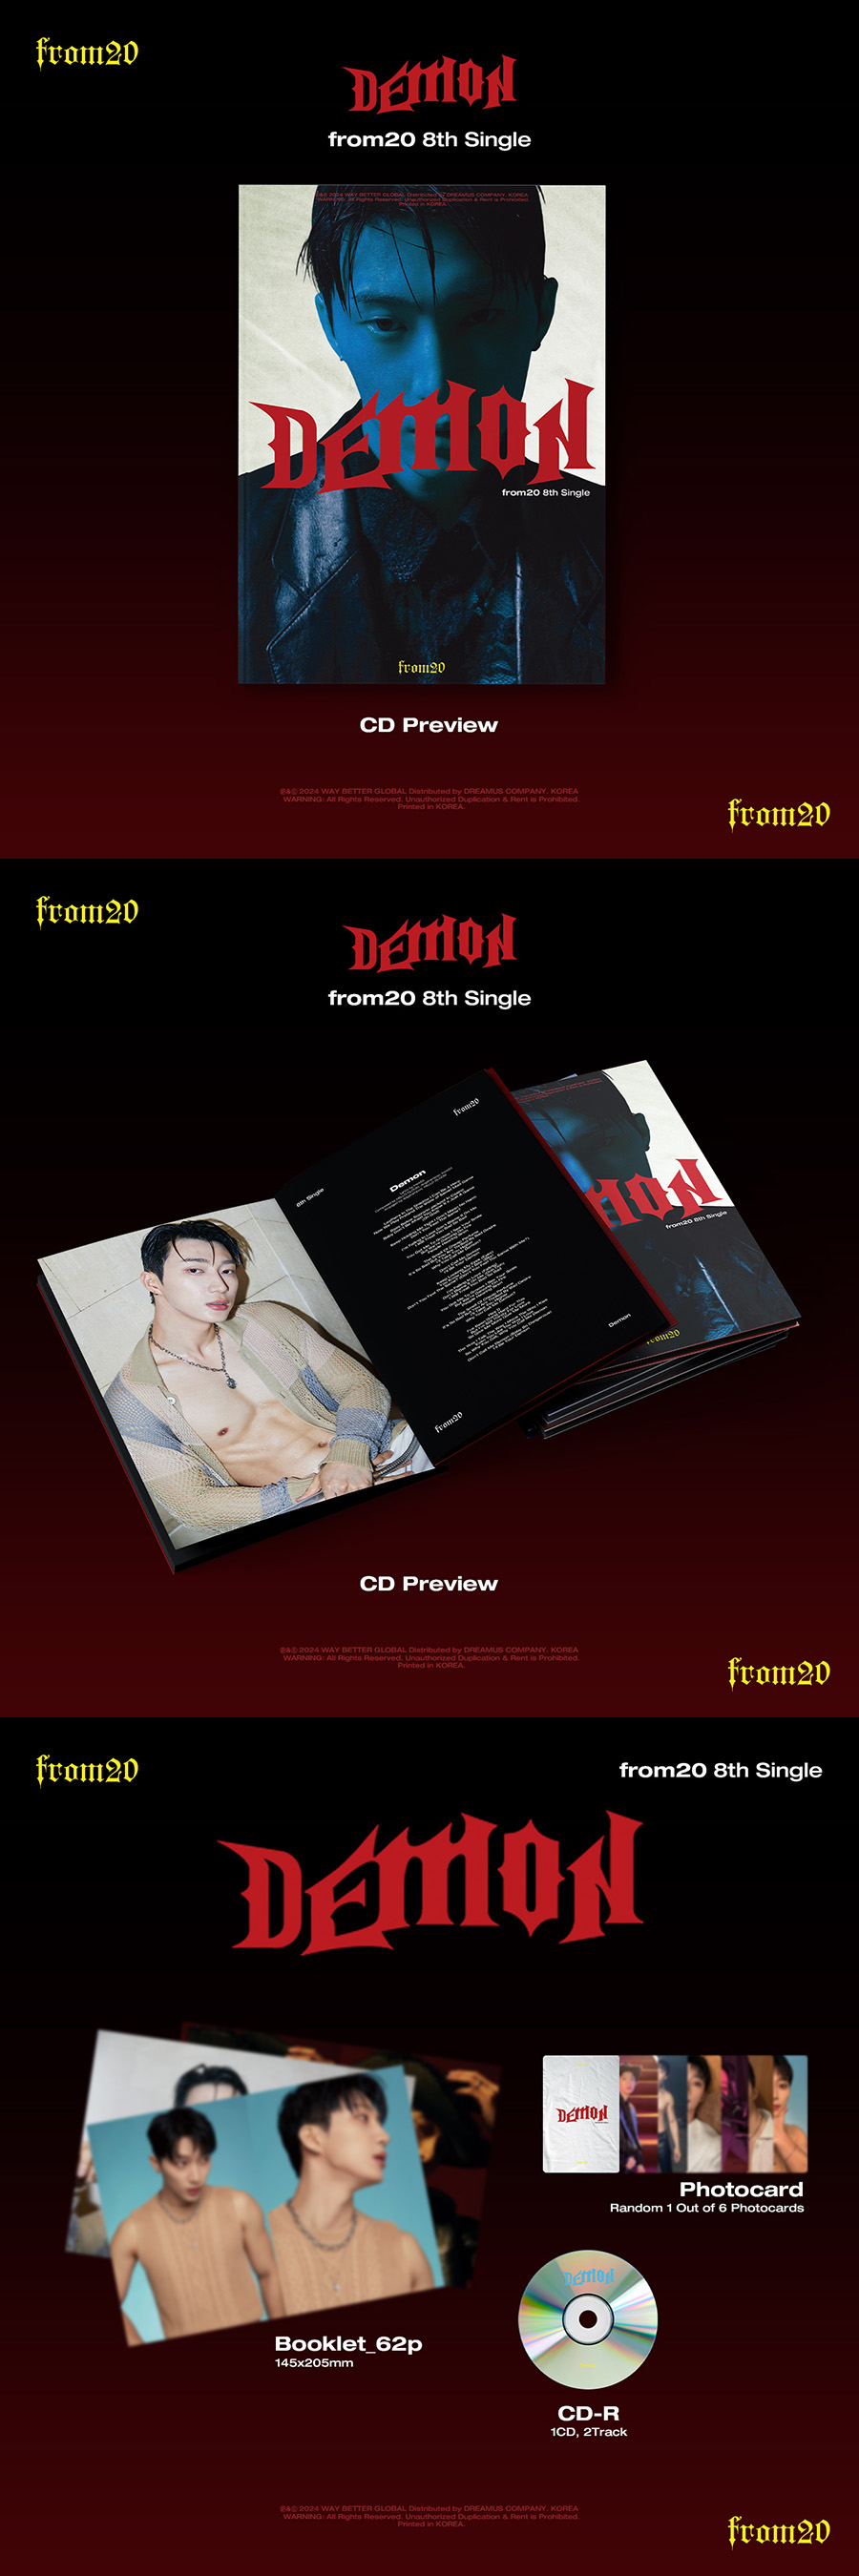 from20 - 싱글앨범/Demon